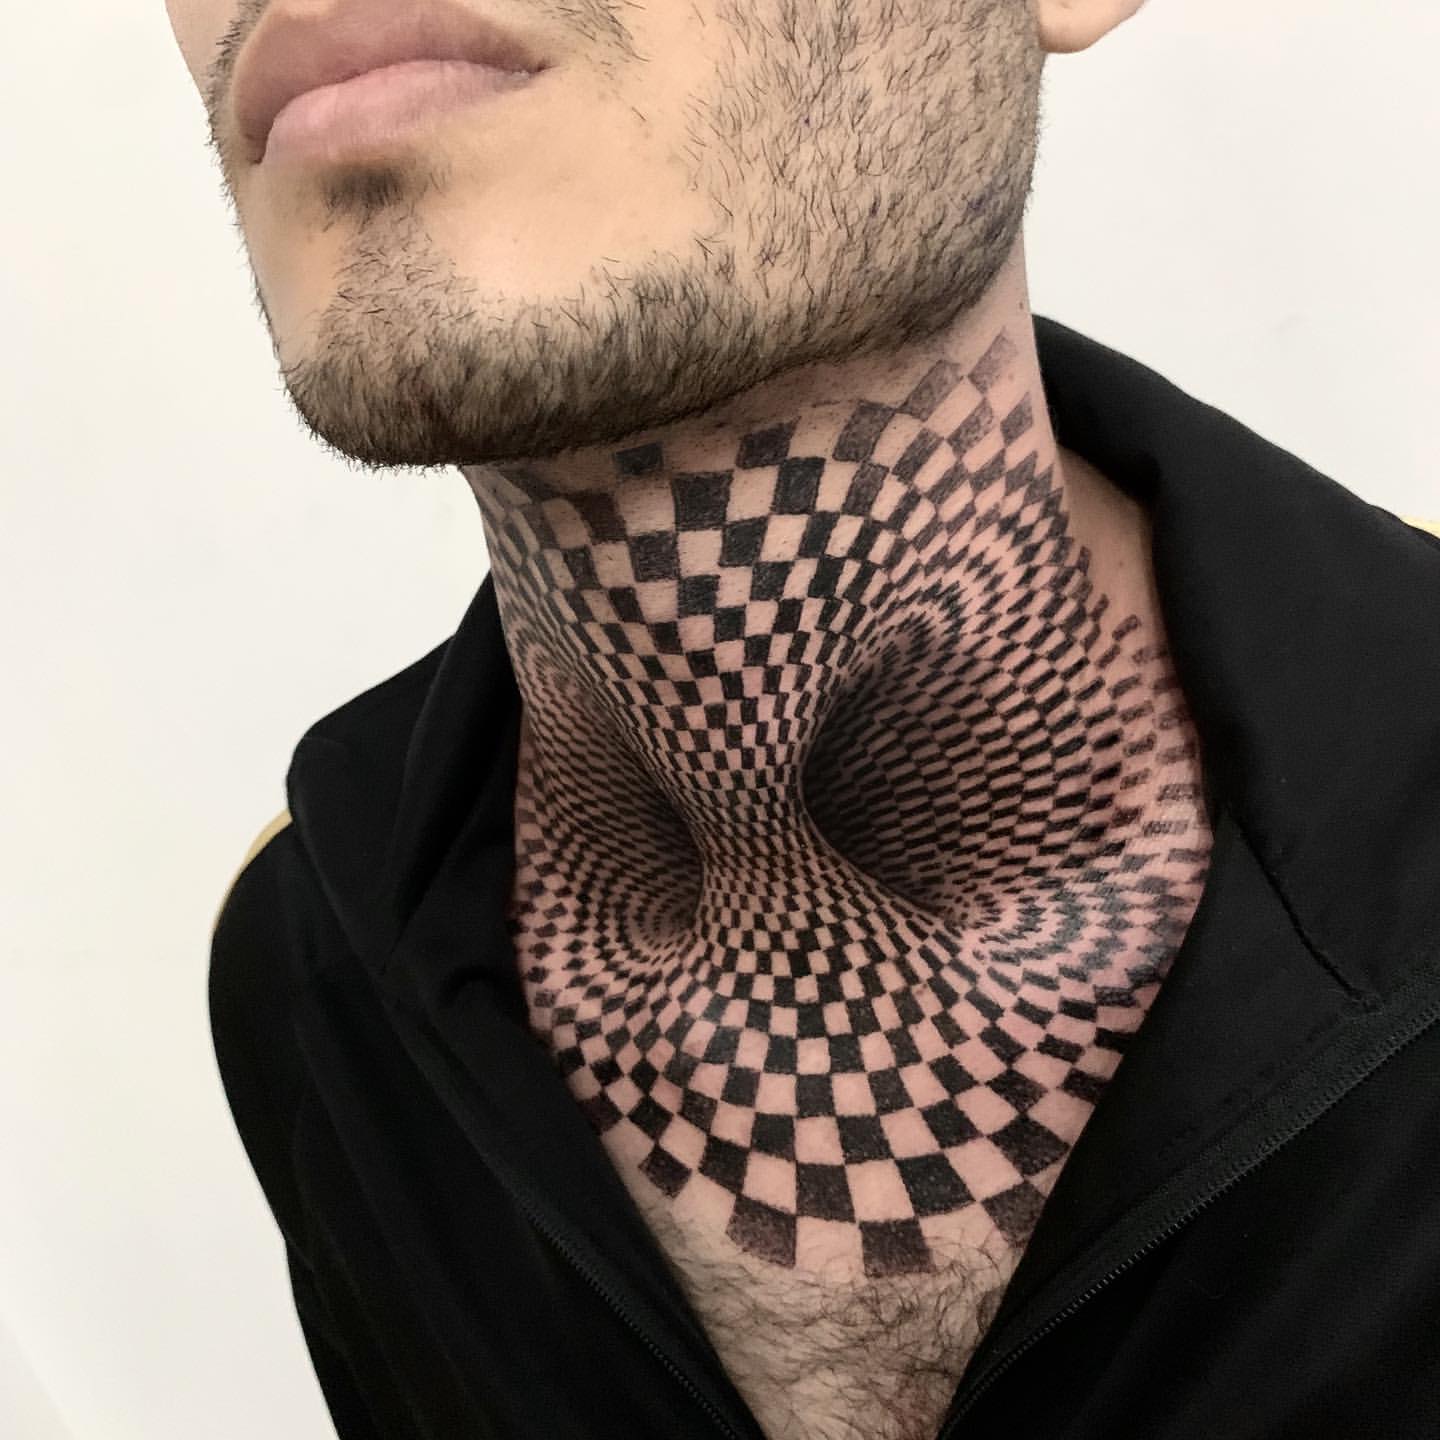 Throat Tattoos for Men 1